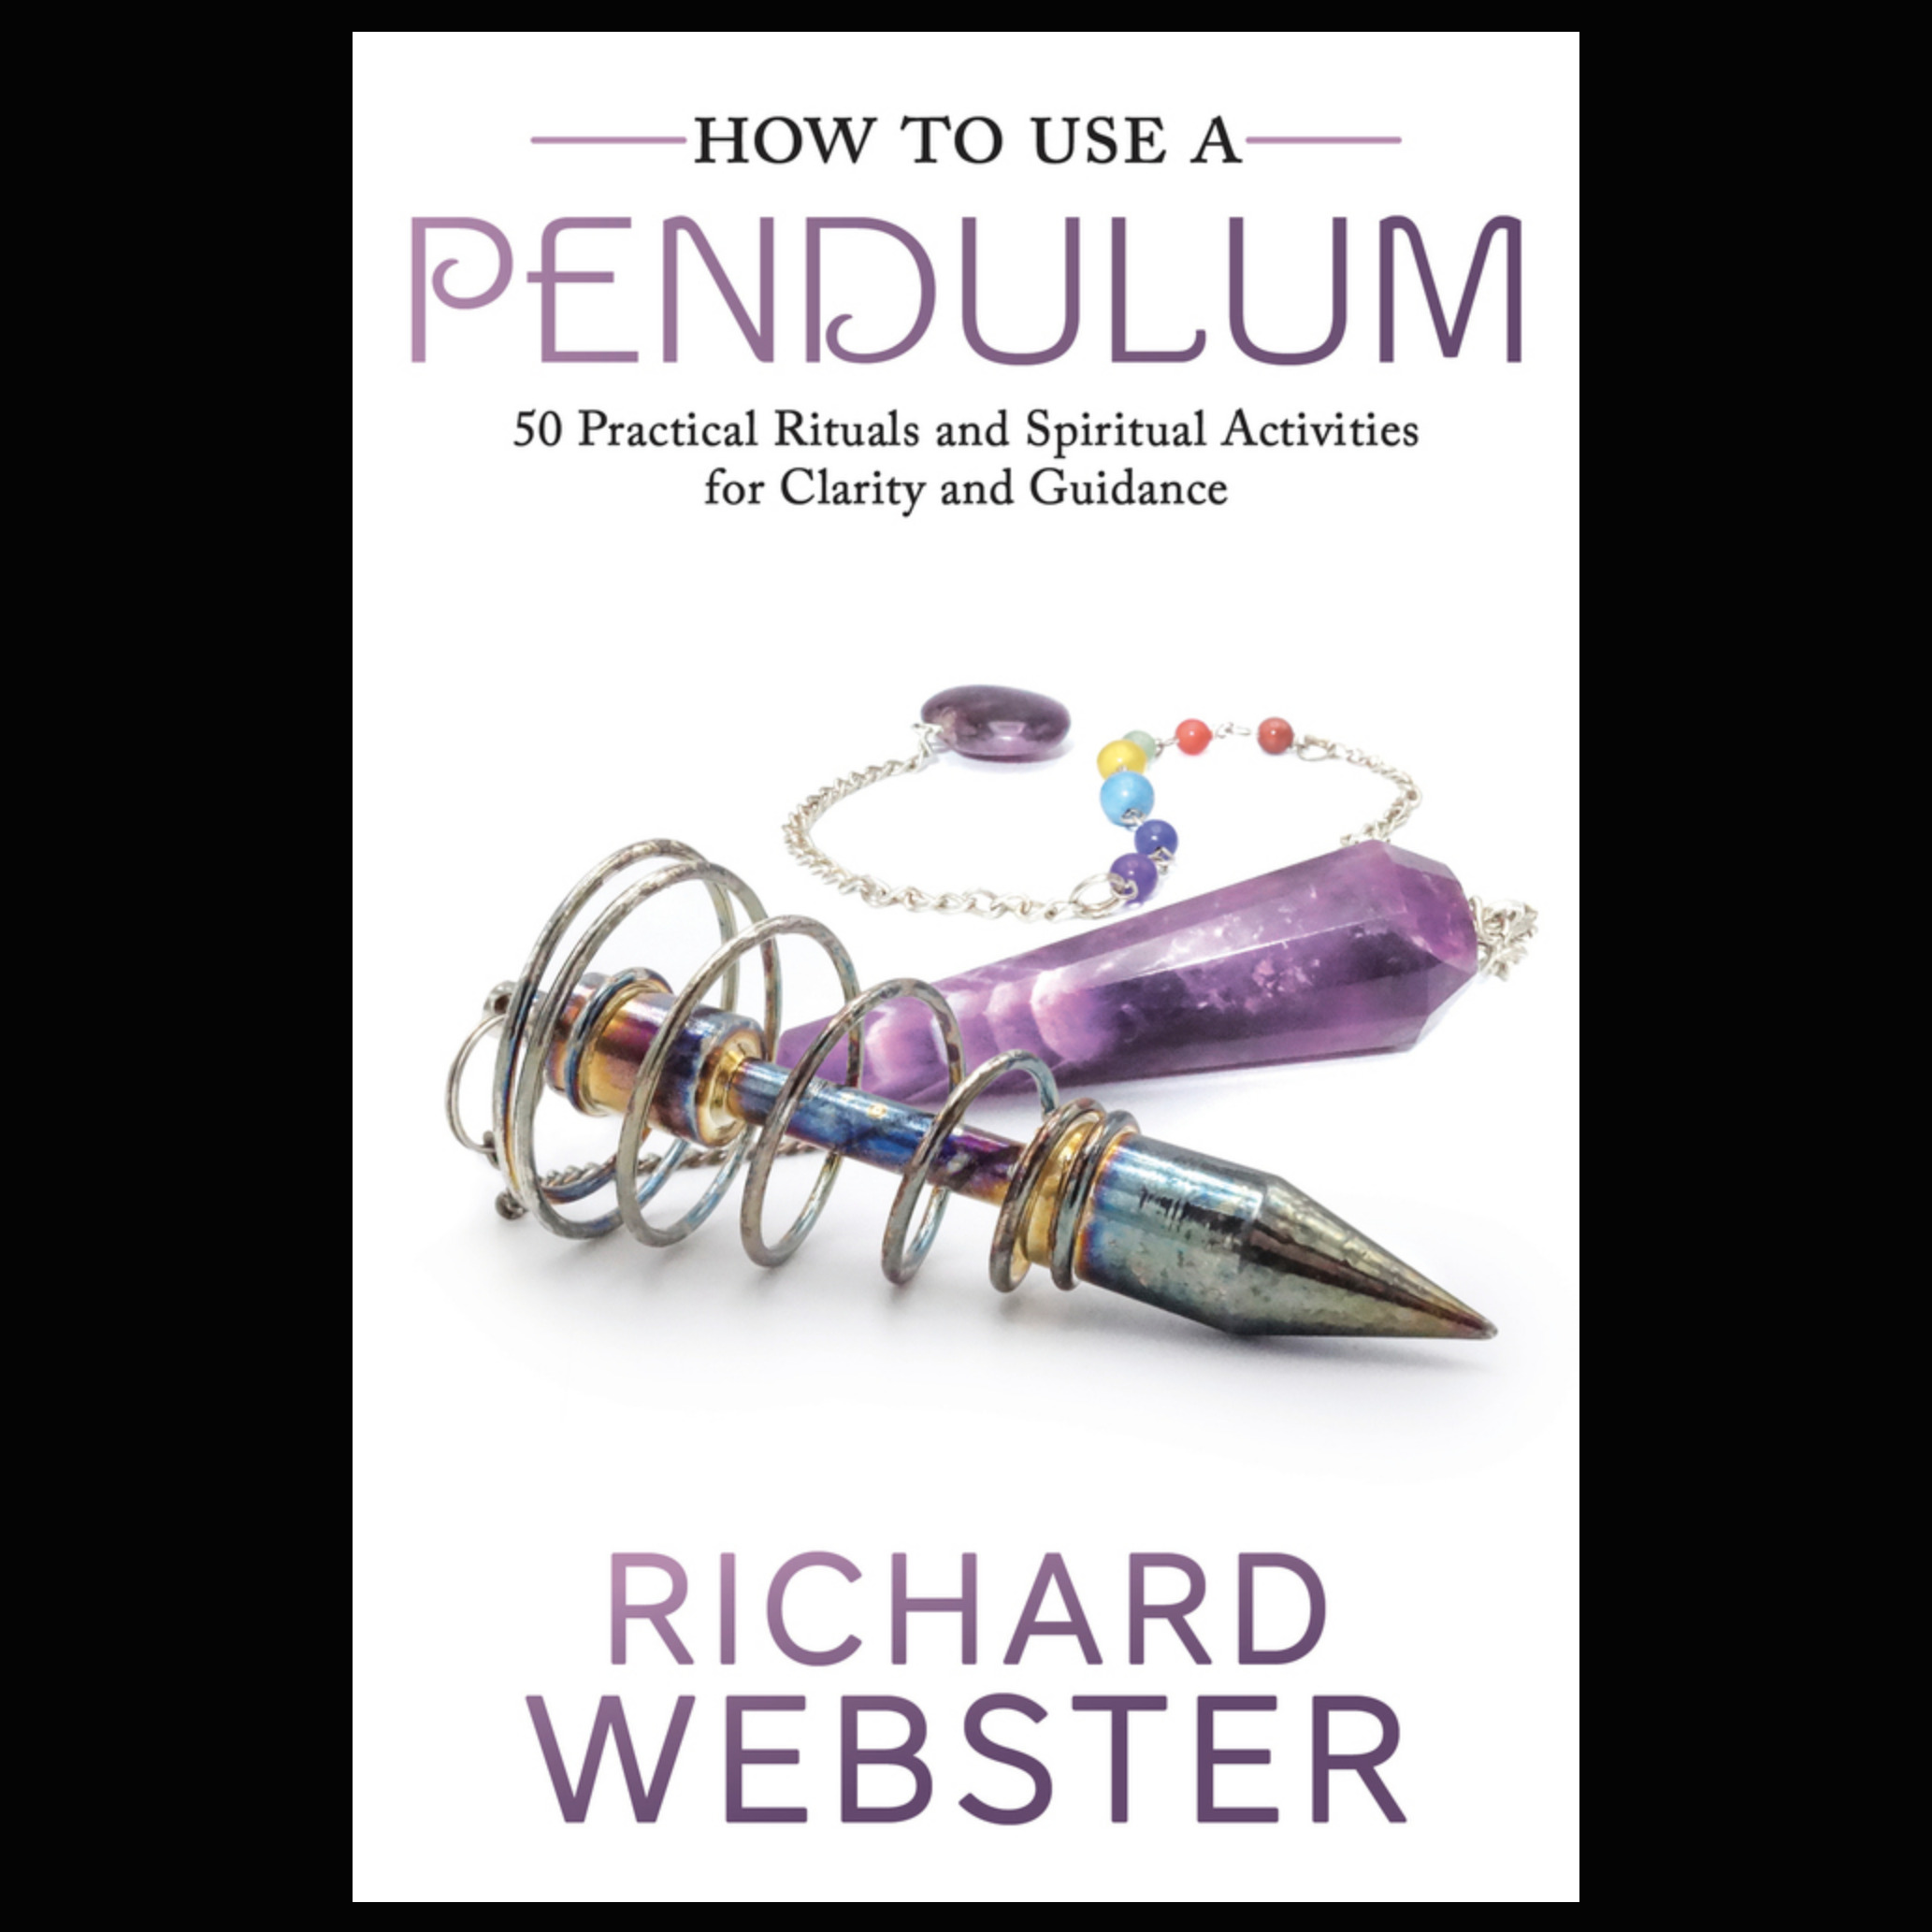 How To Use A Pendulum